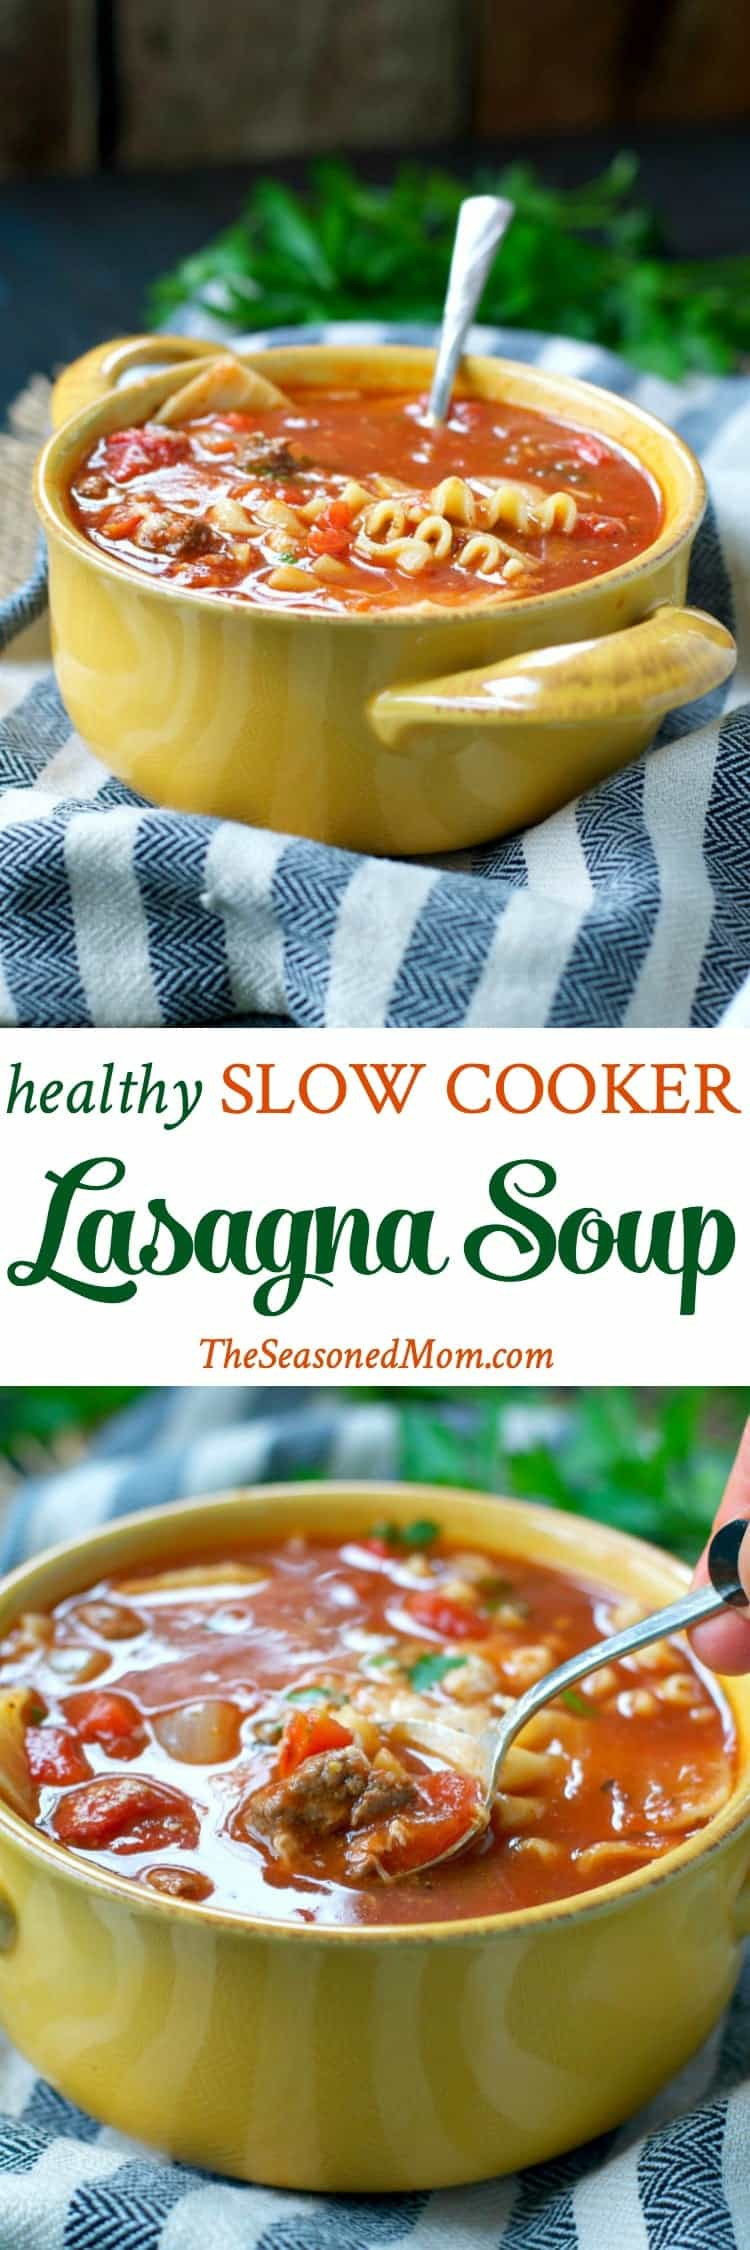 Healthy Slow Cooker Soup Recipes
 Healthy Slow Cooker Lasagna Soup The Seasoned Mom